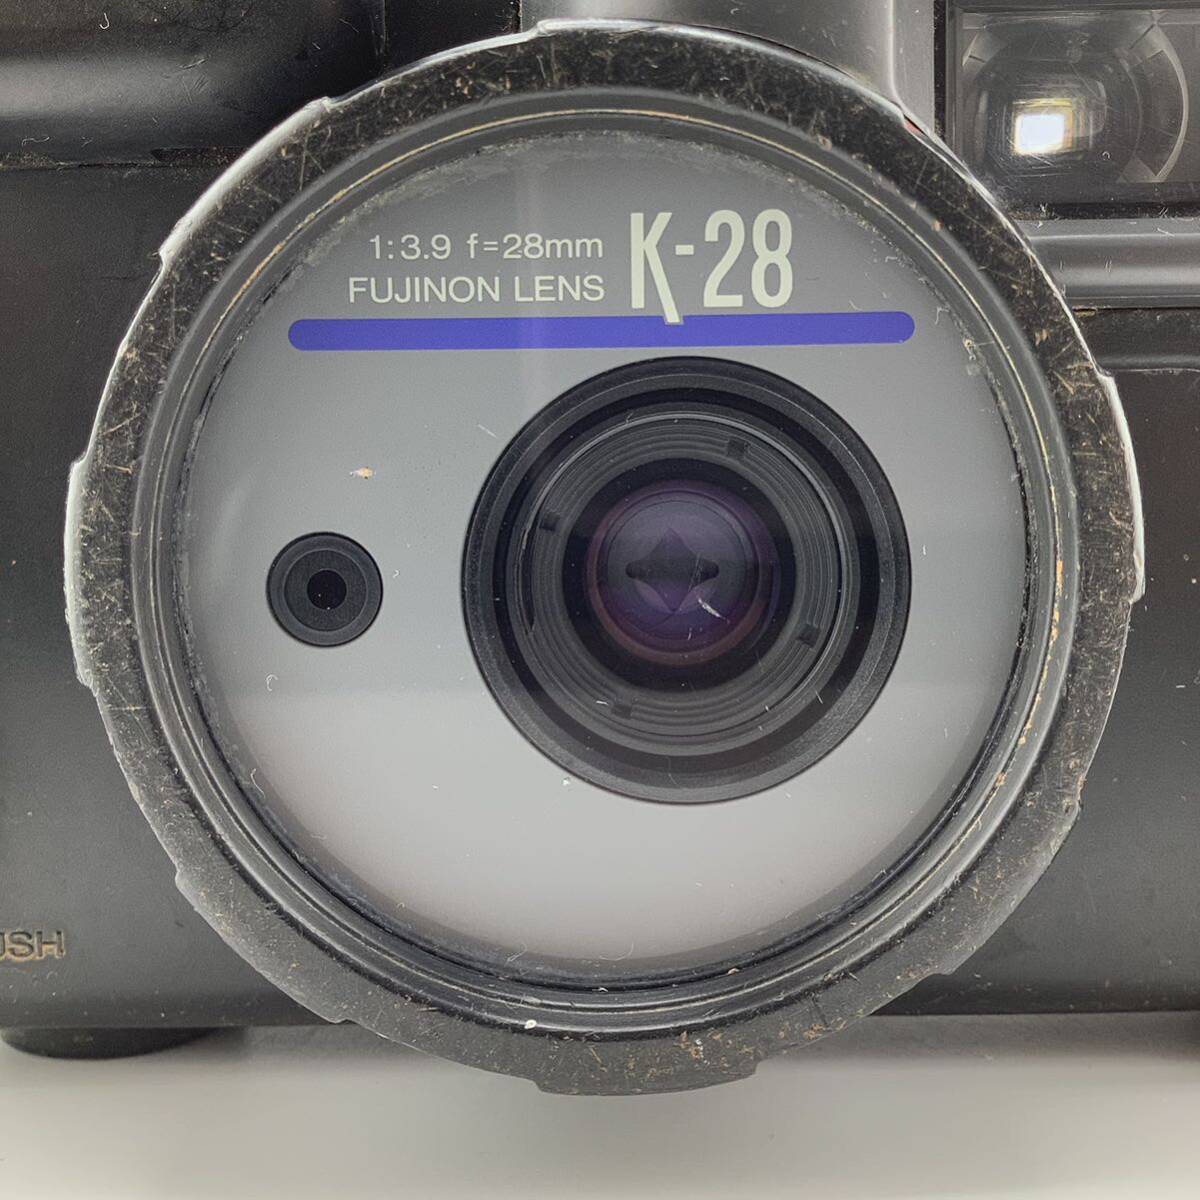 FUJI K-28 フィルムカメラ FUJINON LENS 1:3.9 f=28mm カメラレンズ 工事現場 レトロ【S30276-501】の画像3